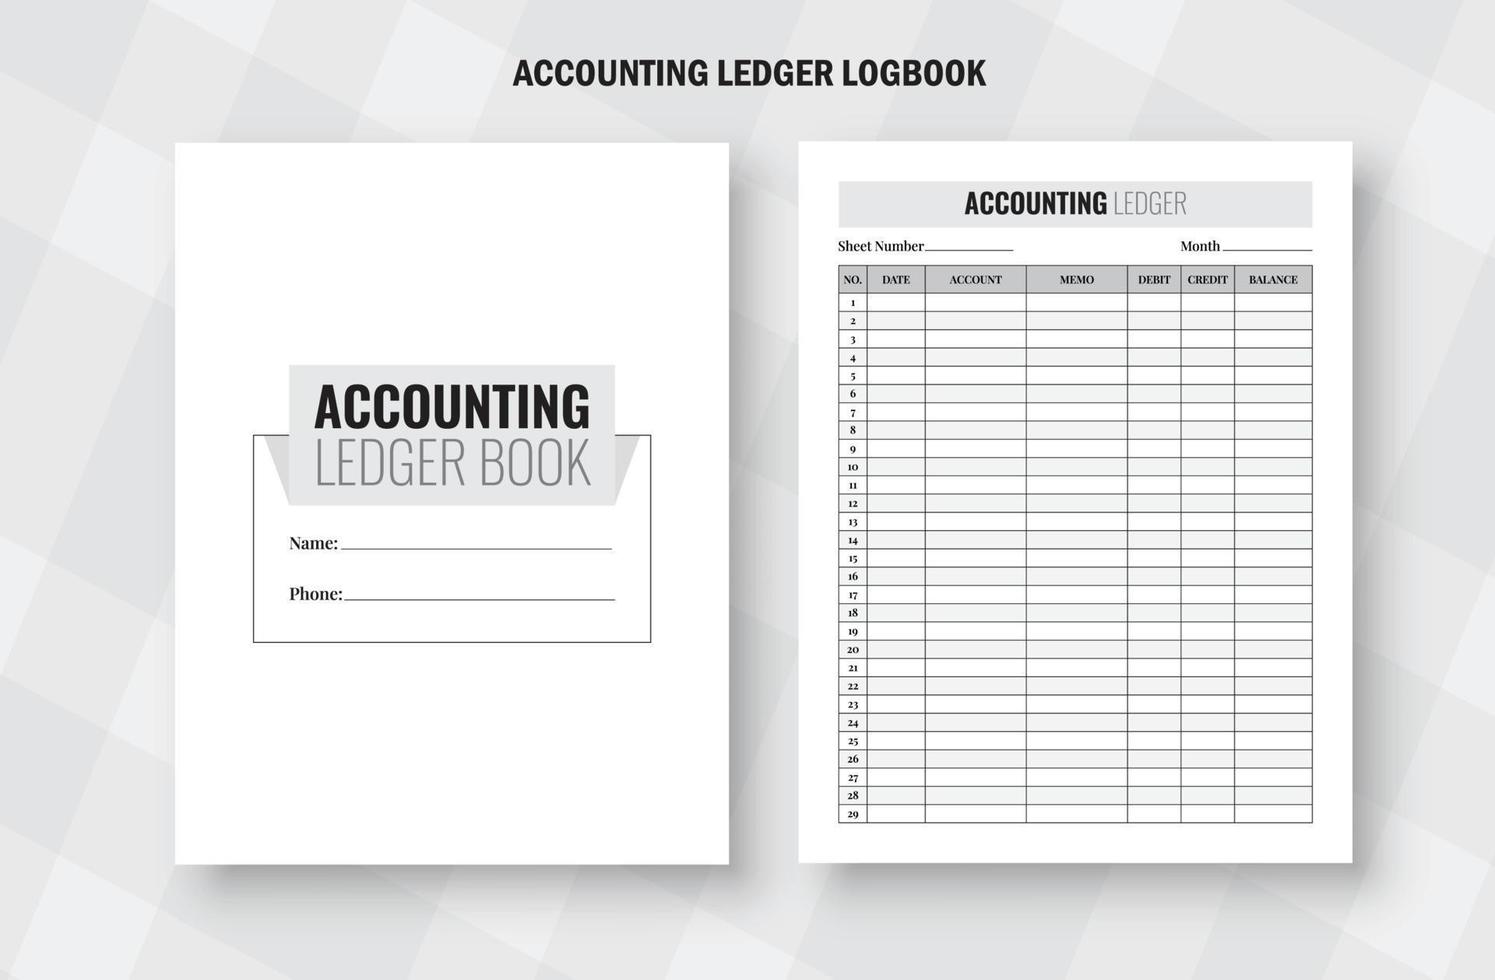 Accounting ledger log book vector